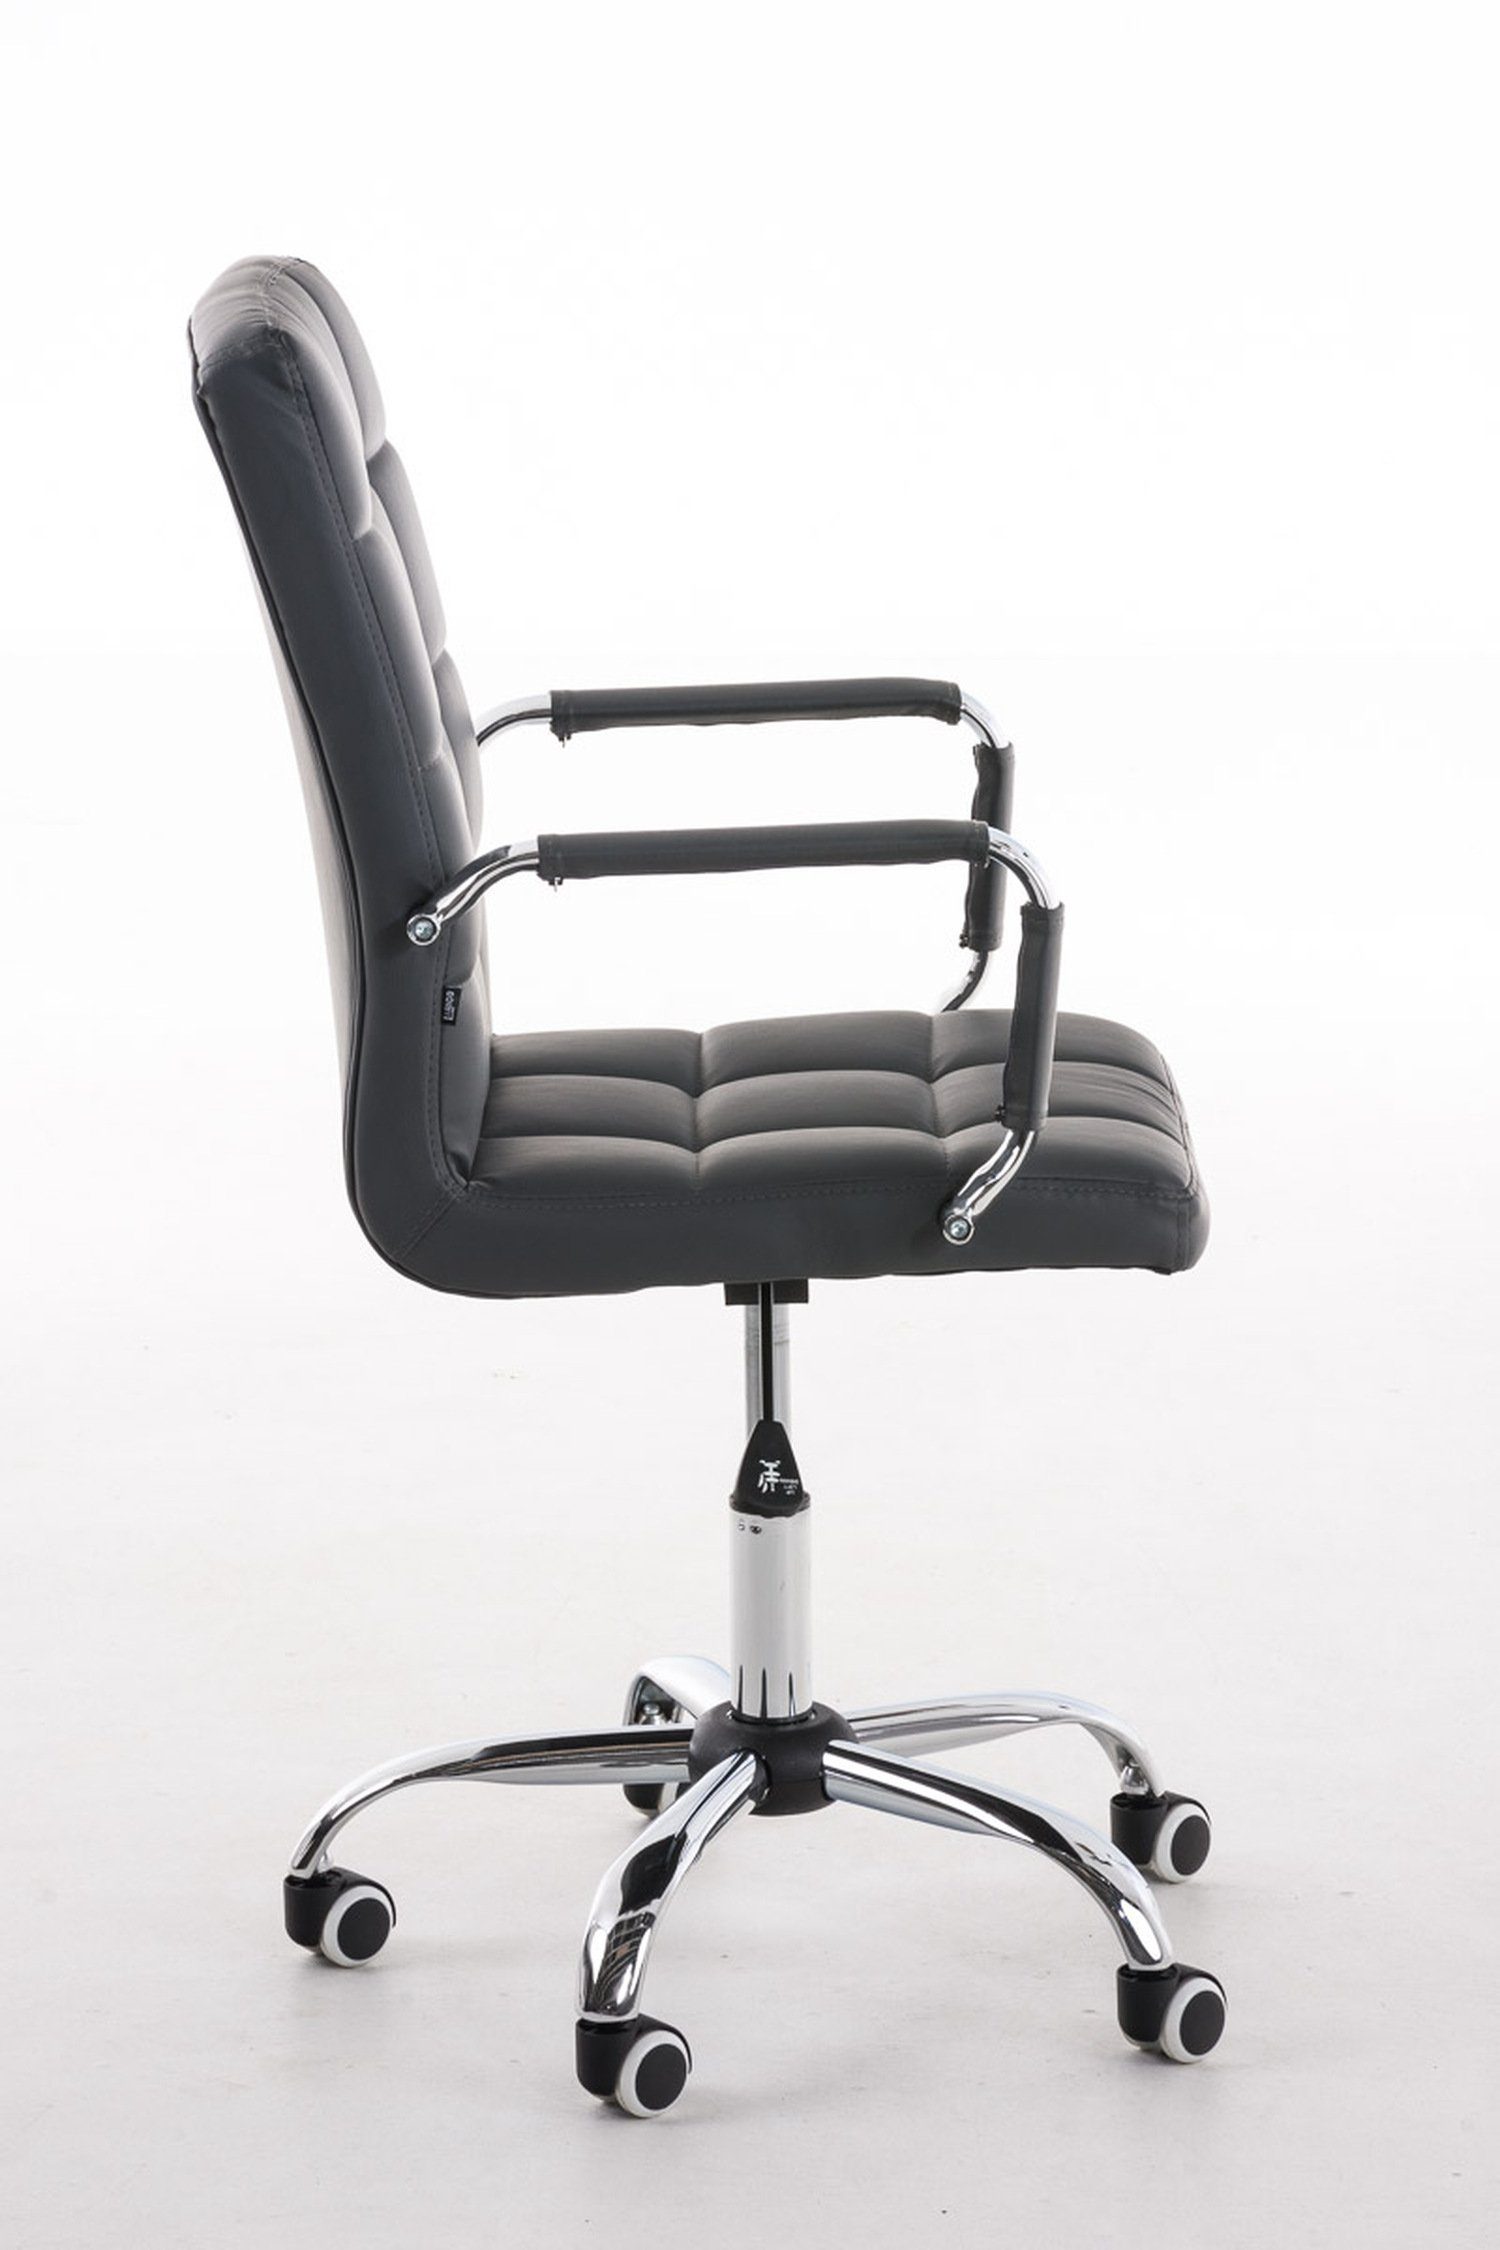 TPFLiving Bürostuhl Deal V2 mit chrom Chefsessel), Drehstuhl, Konferenzstuhl, Sitzfläche: grau Gestell: Rückenlehne bequemer Metall - Kunstleder (Schreibtischstuhl